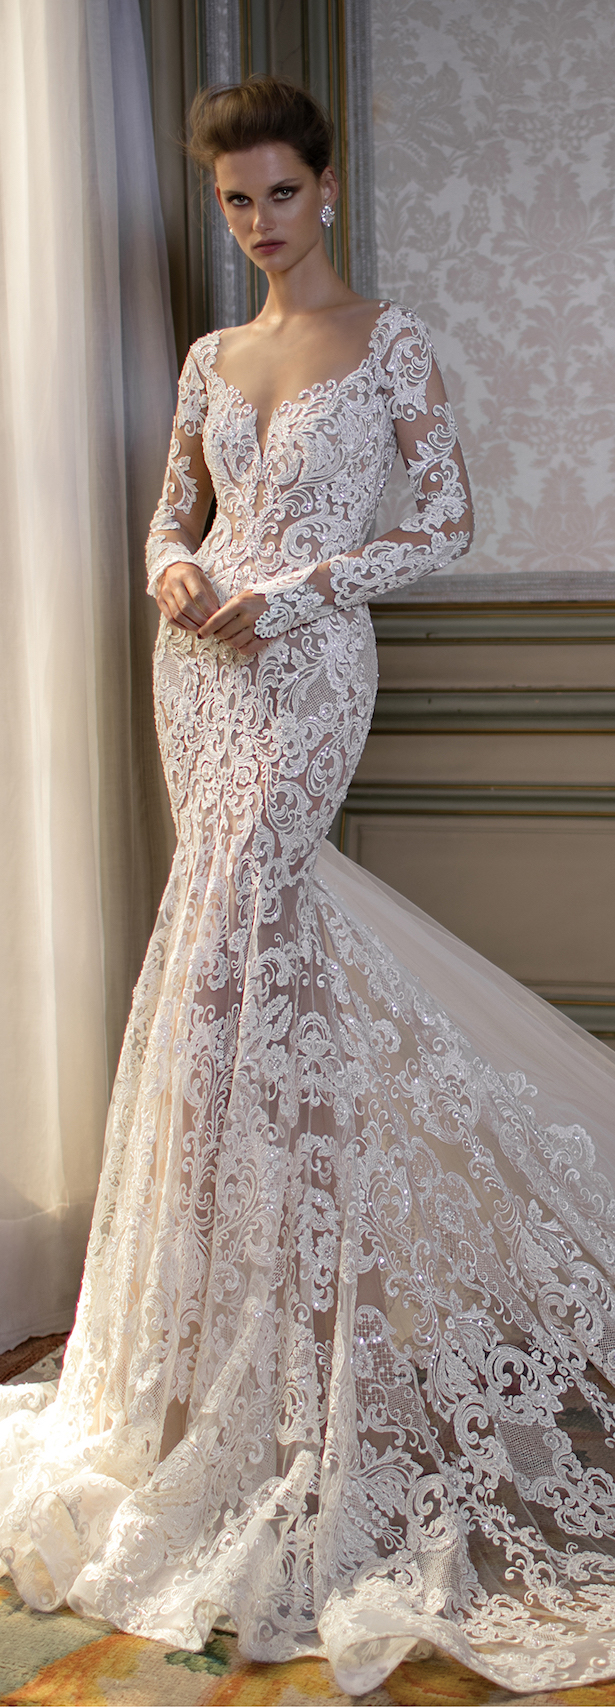 Berta Bridal embellished wedding gowns